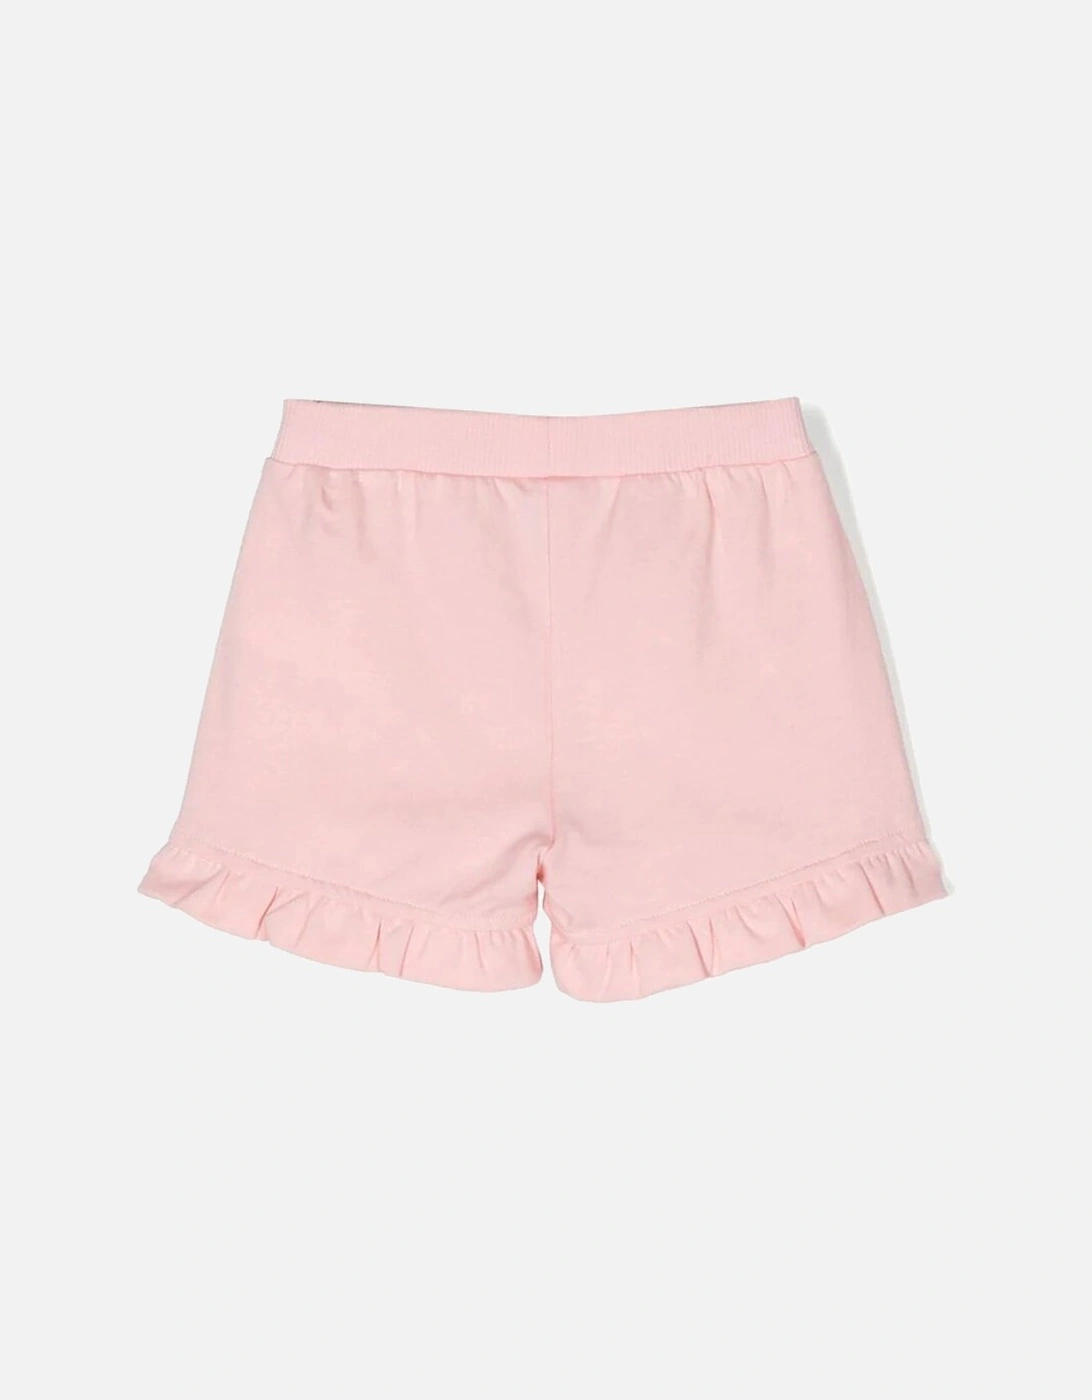 Baby Girls Teddy Bear Shorts Pink